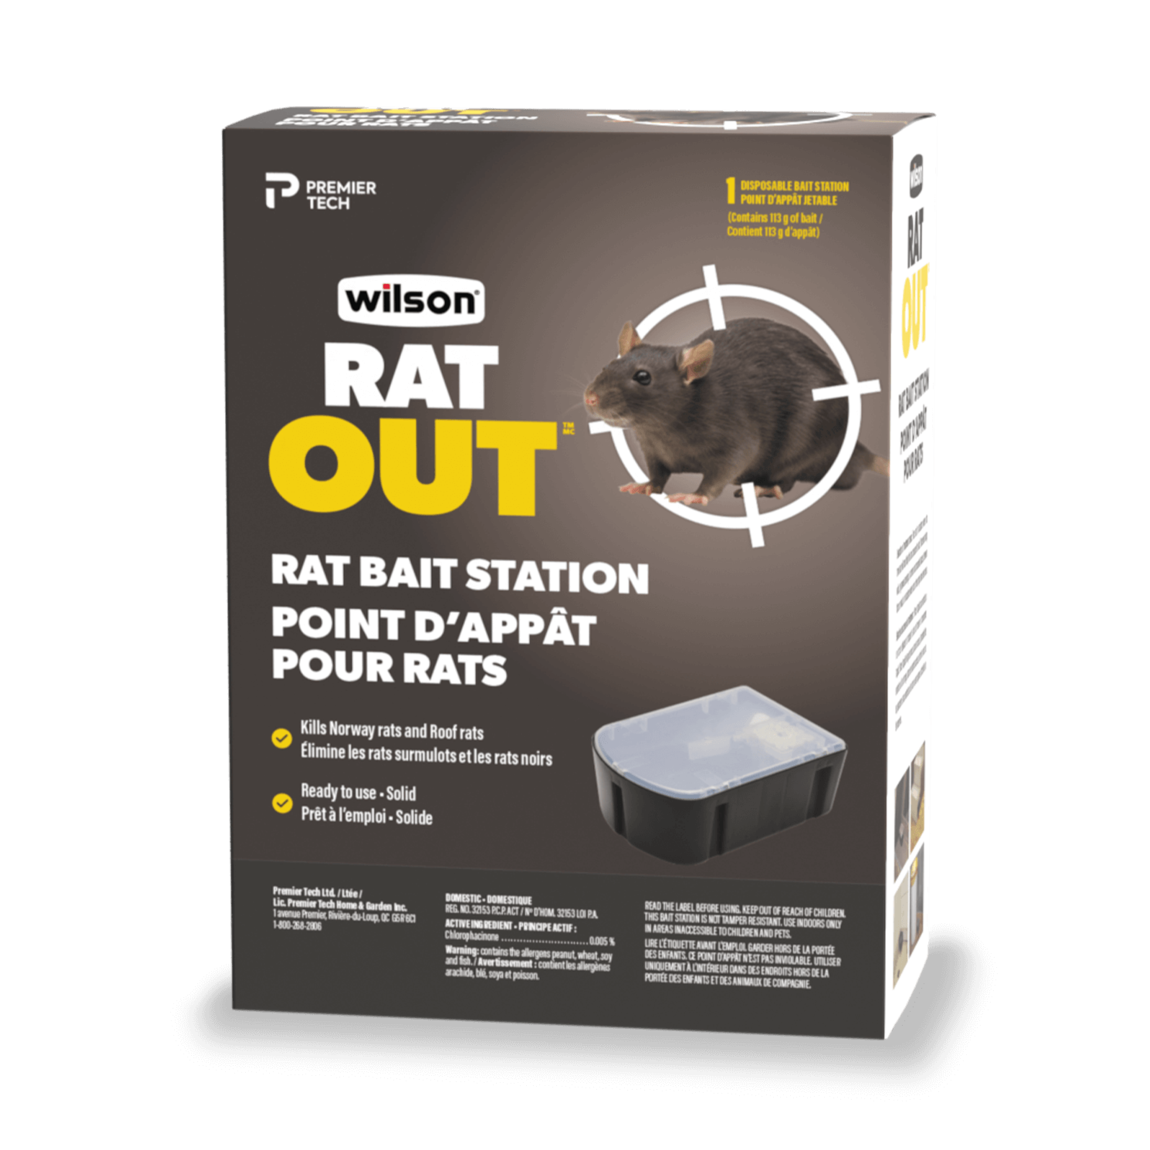 Rat Bait - What is the Best Bait to Catch Rats?